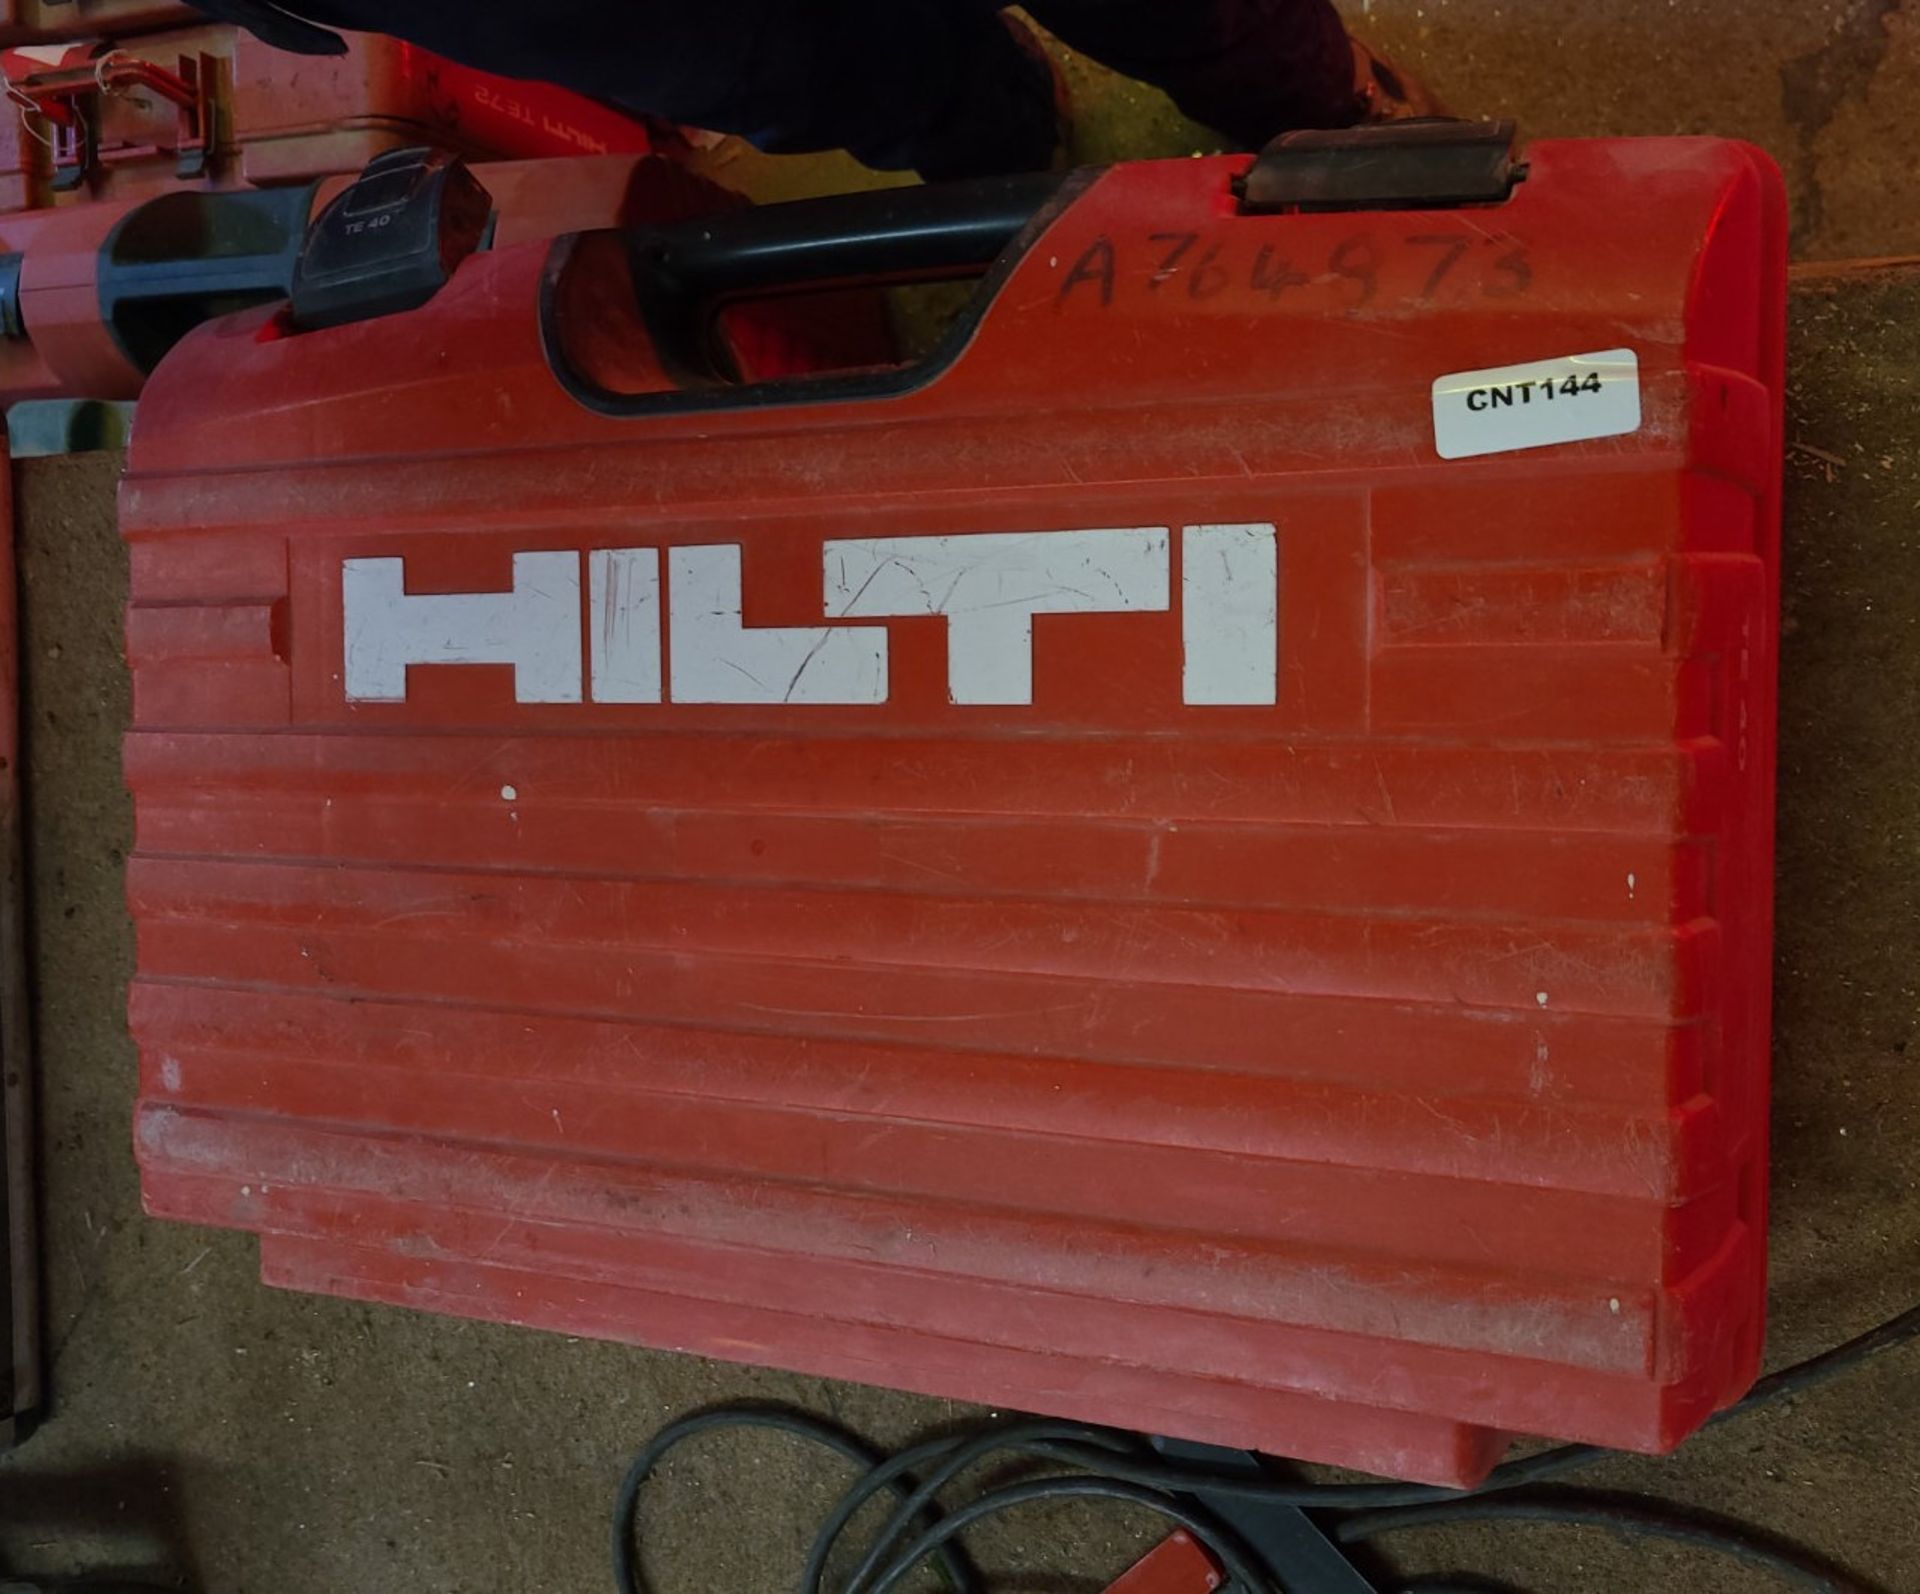 1 x Hilti TE40-Avr Combi Hammer Drill In Case - Ref: CNT144 - CL846 - Location: Oxford OX2 - Image 4 of 5